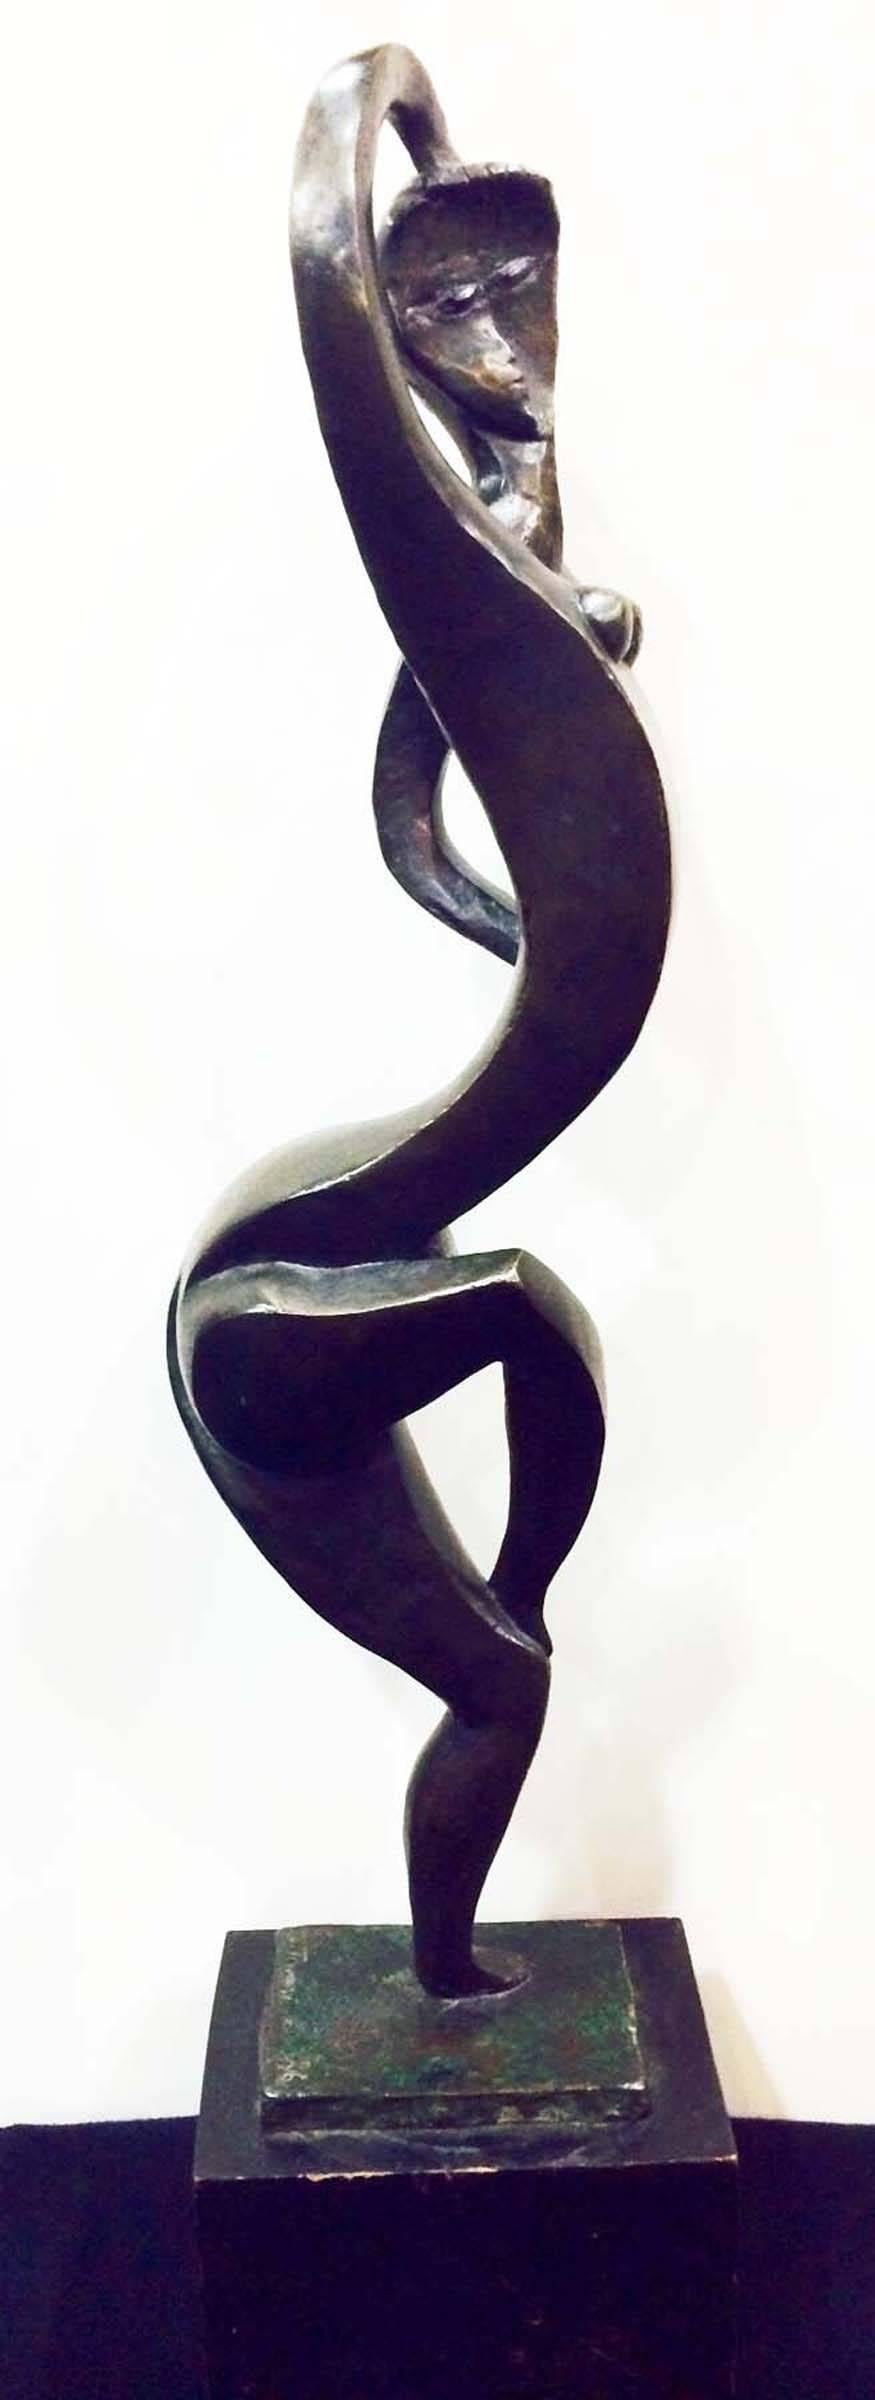 Josephine Baker - Cubist Sculpture by Sebastien Tamari